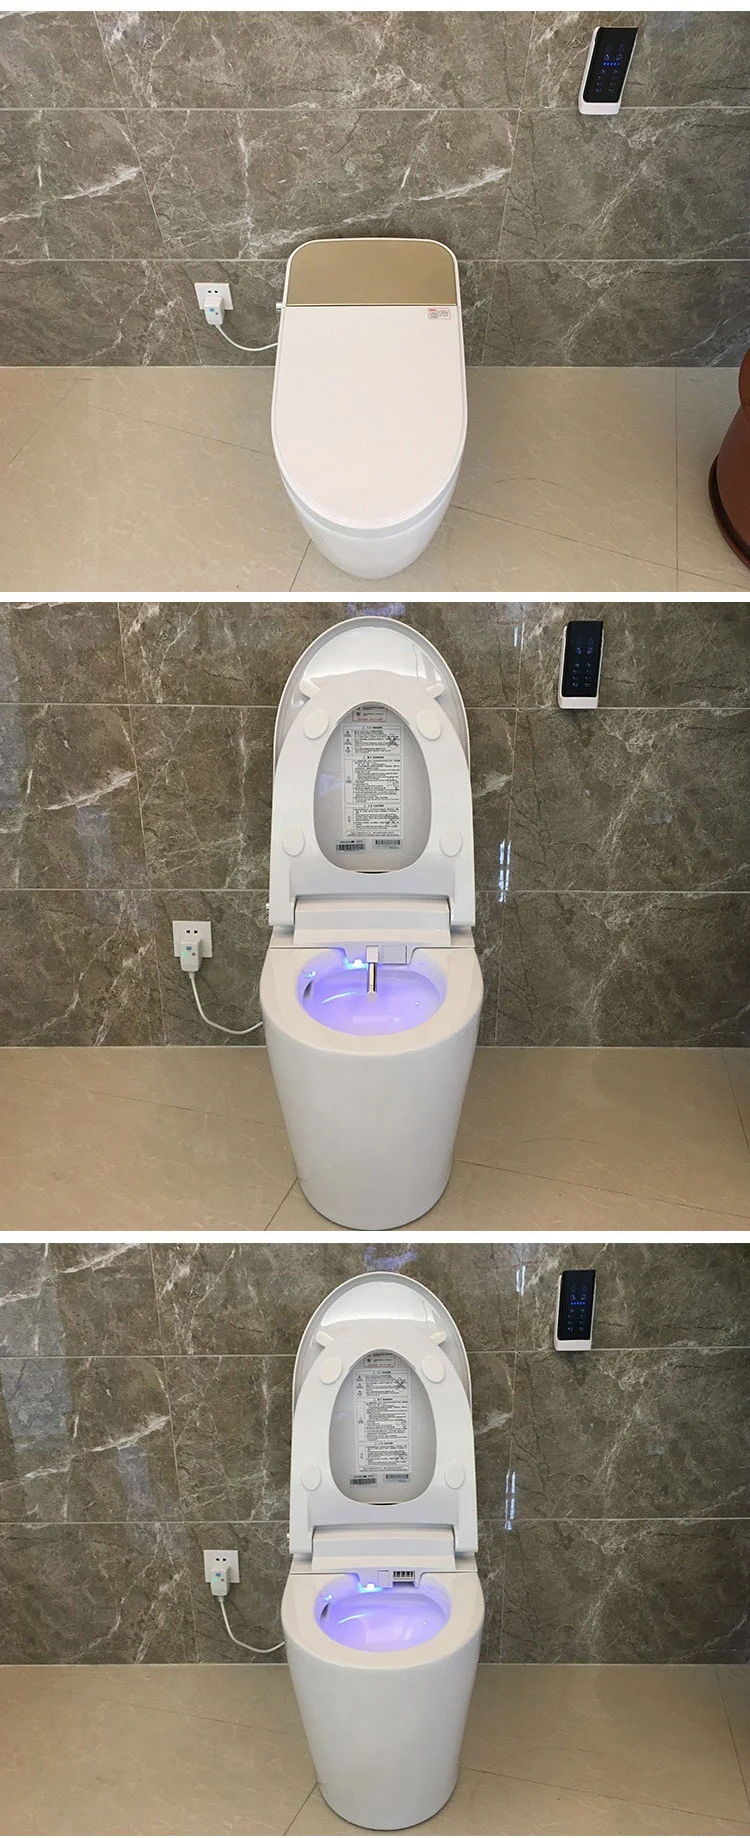 Intelligent automatic flushing toilet with bidet function